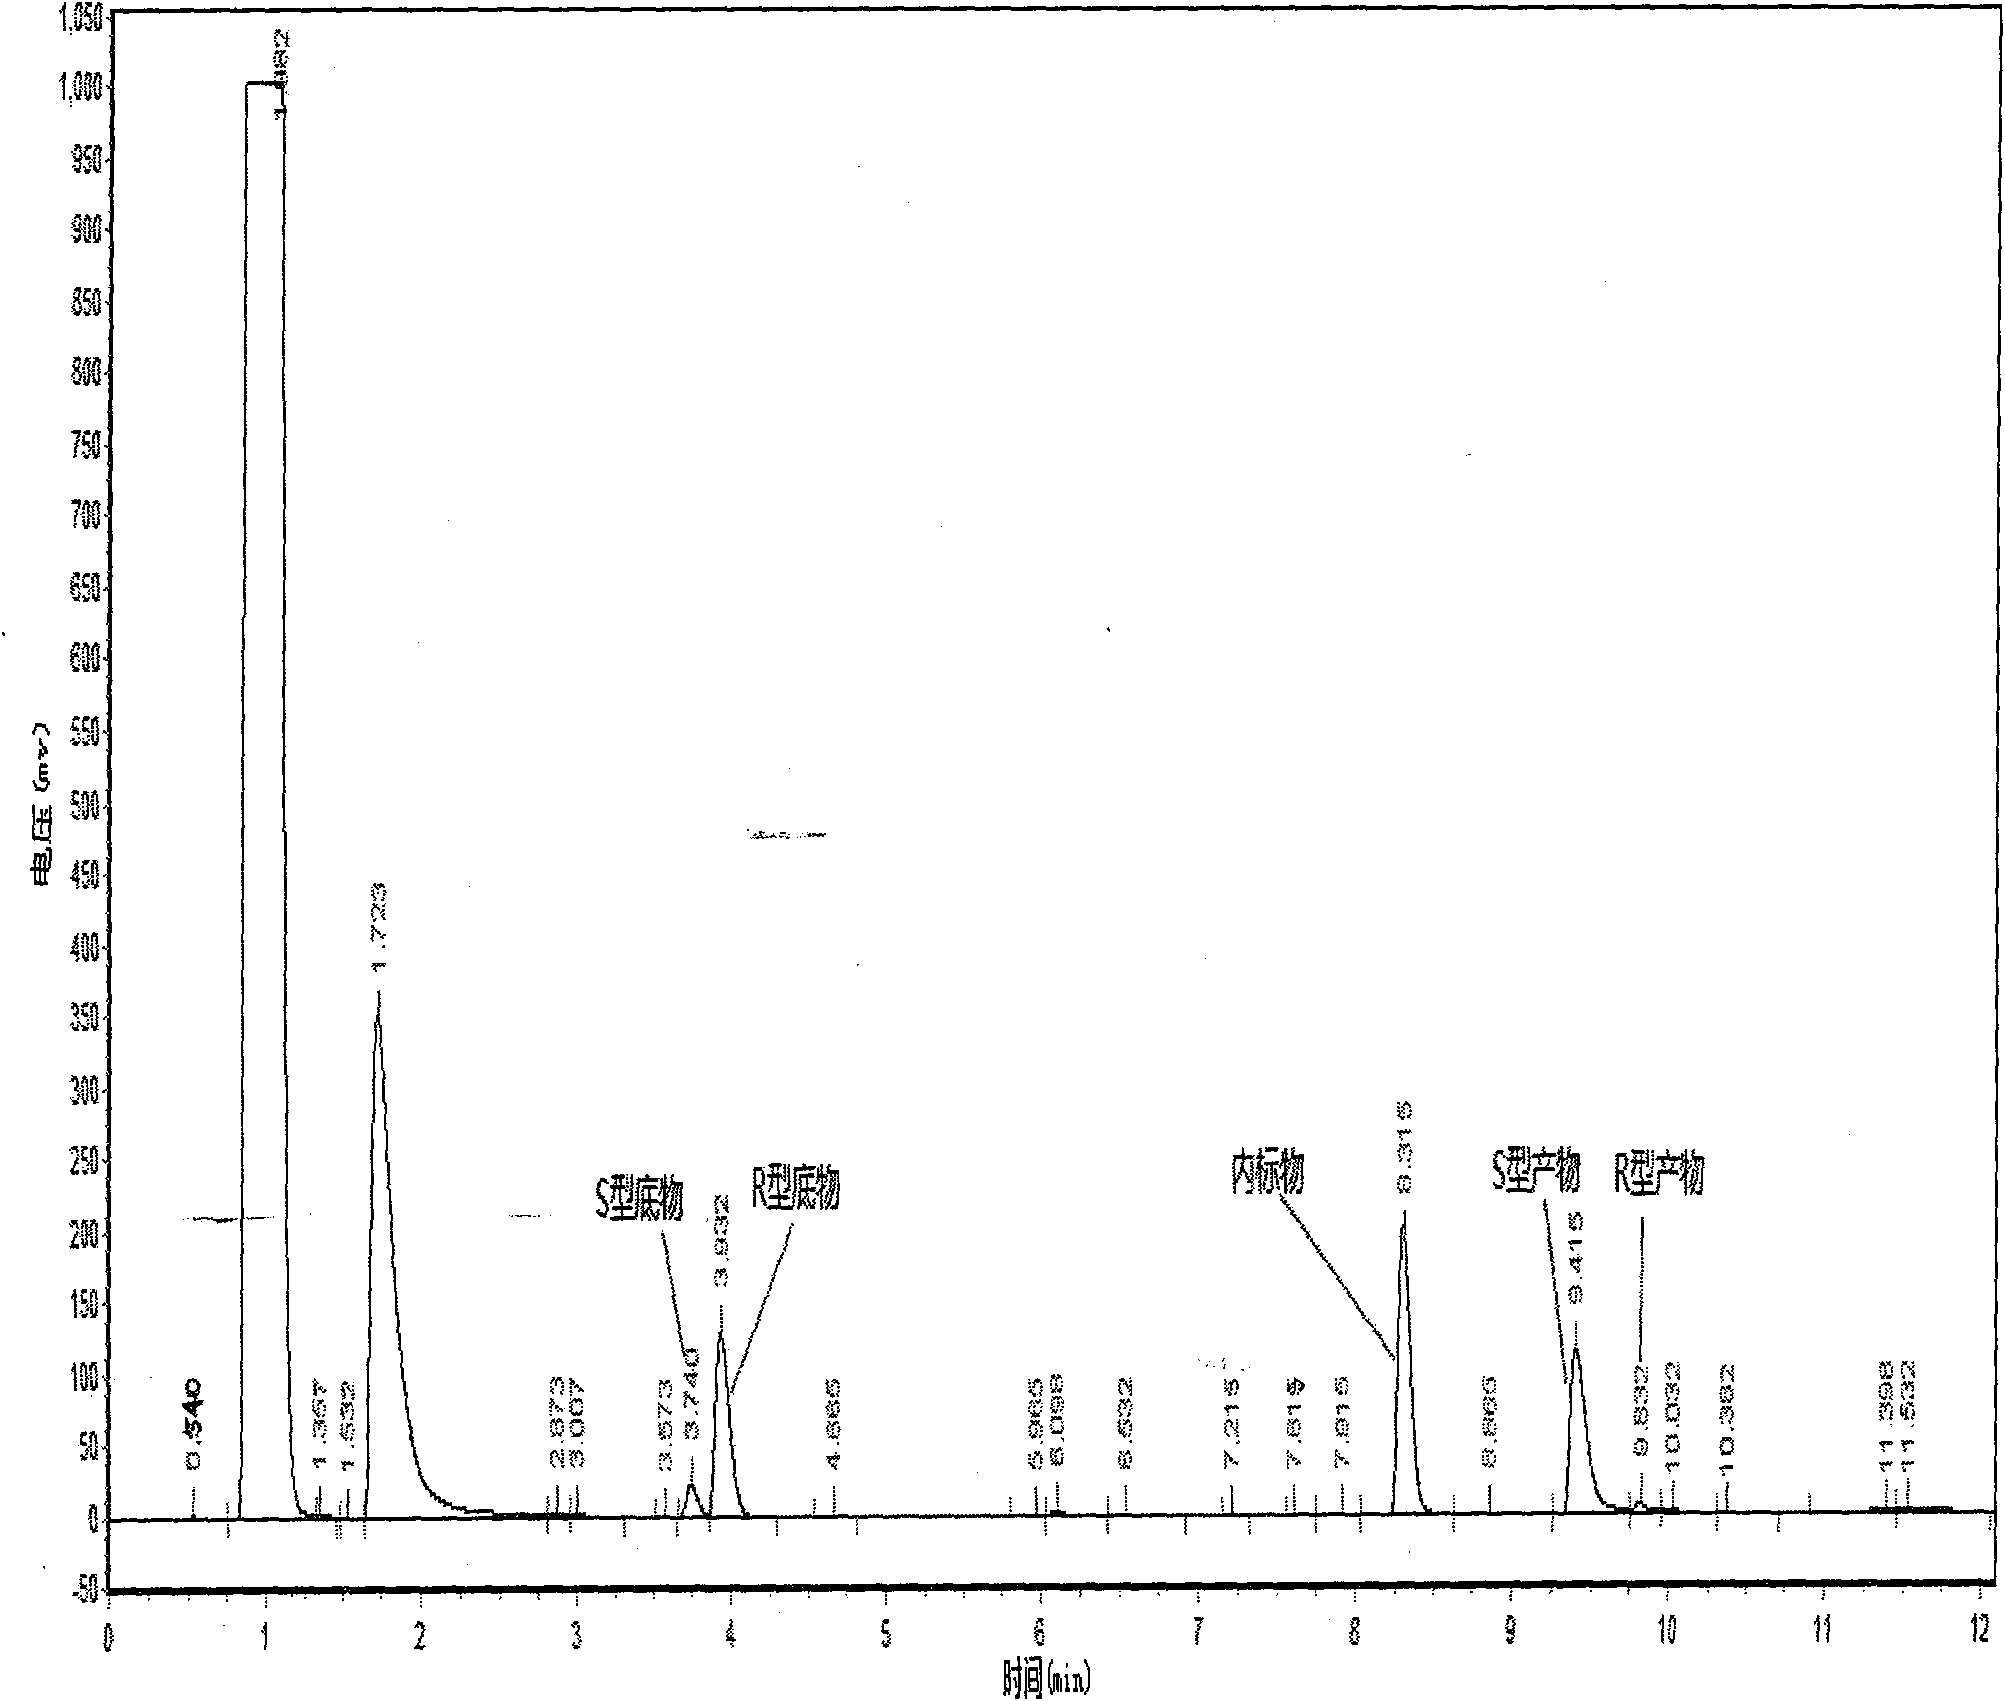 Preparation method of (S)-(+)-2,2-dimethylcyclopropanecarboxylic acid by biocatalysis